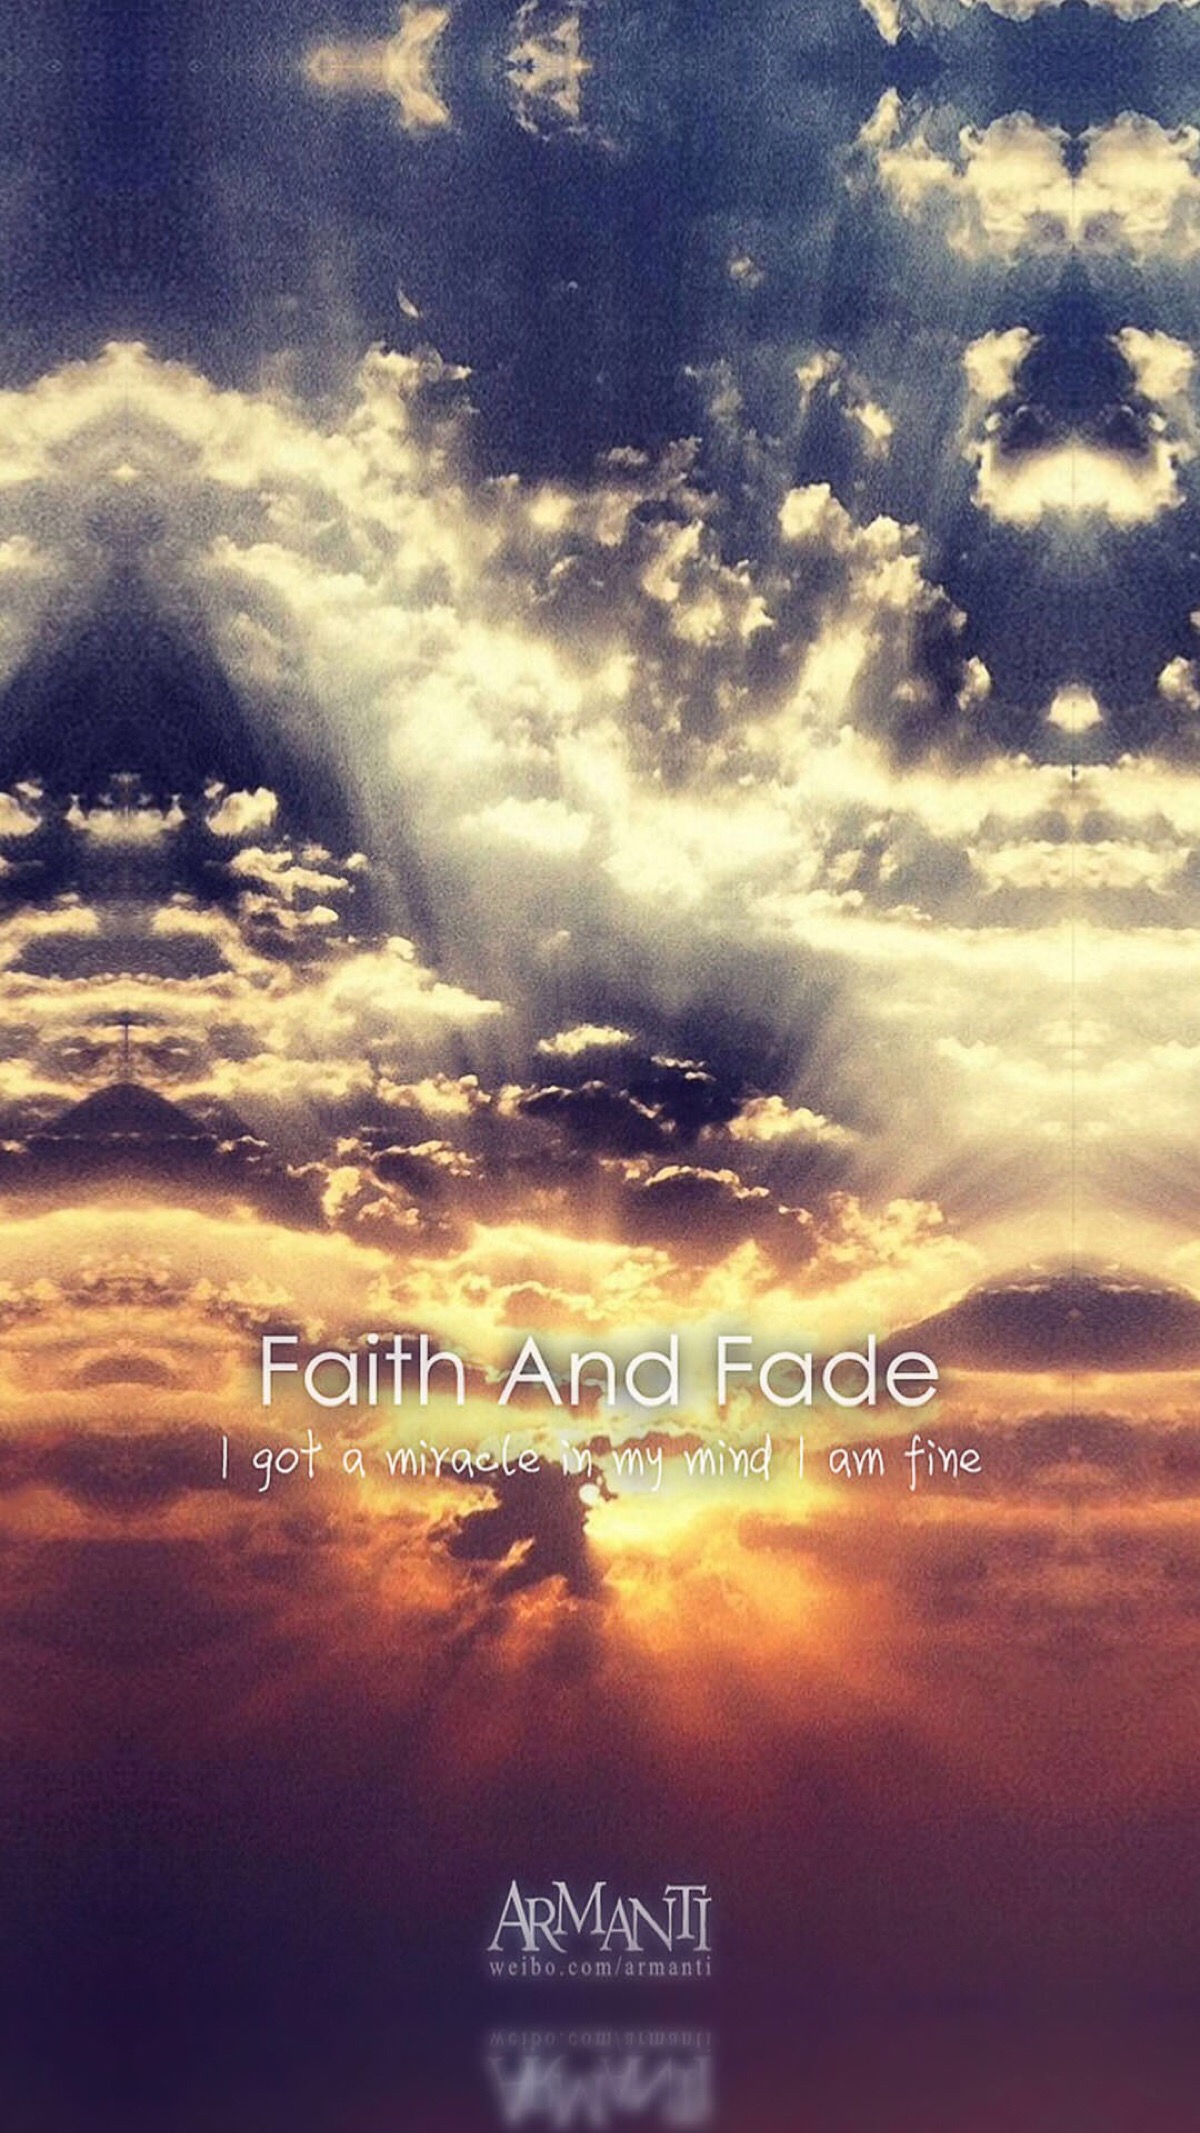 faithandfade图片